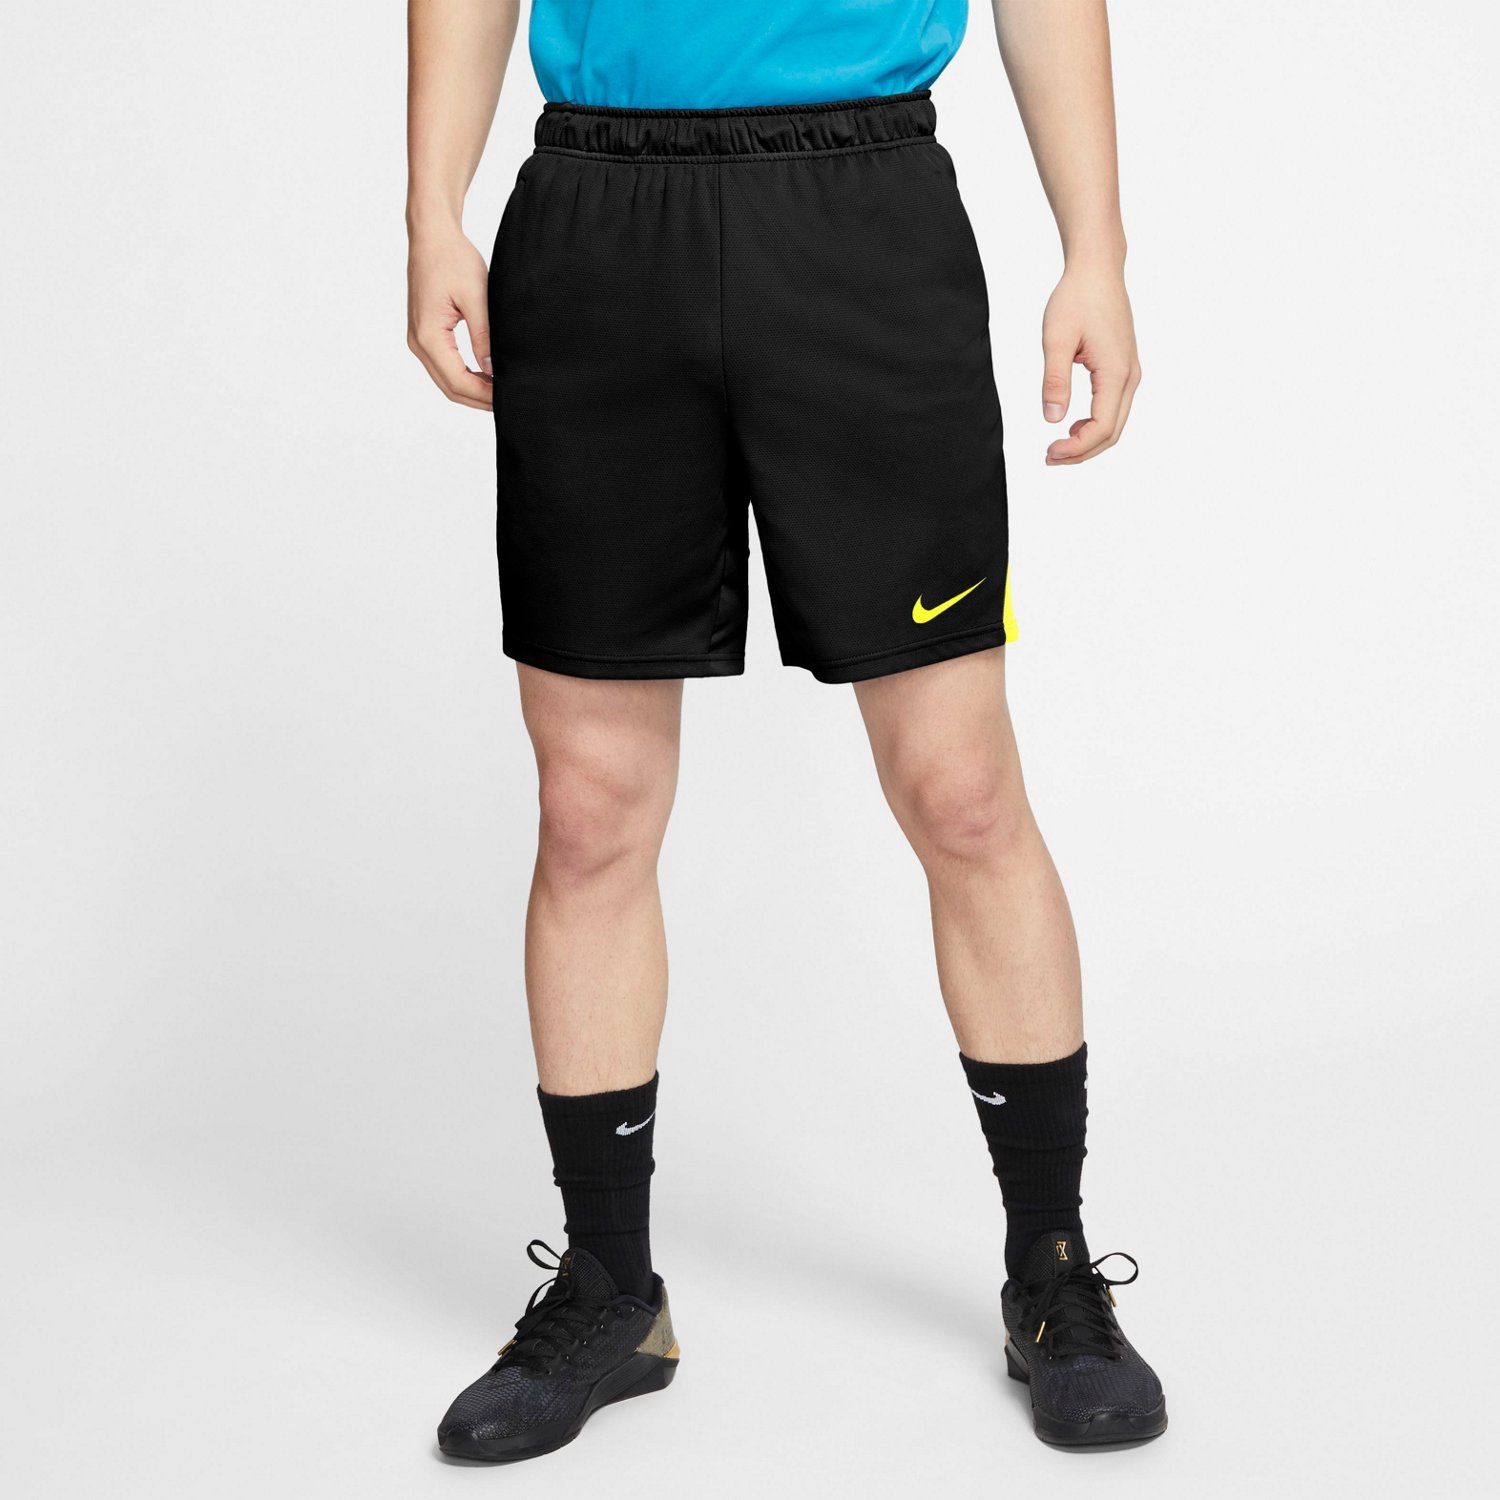 Nike Men's Dry 5.0 Training Shorts | Academy